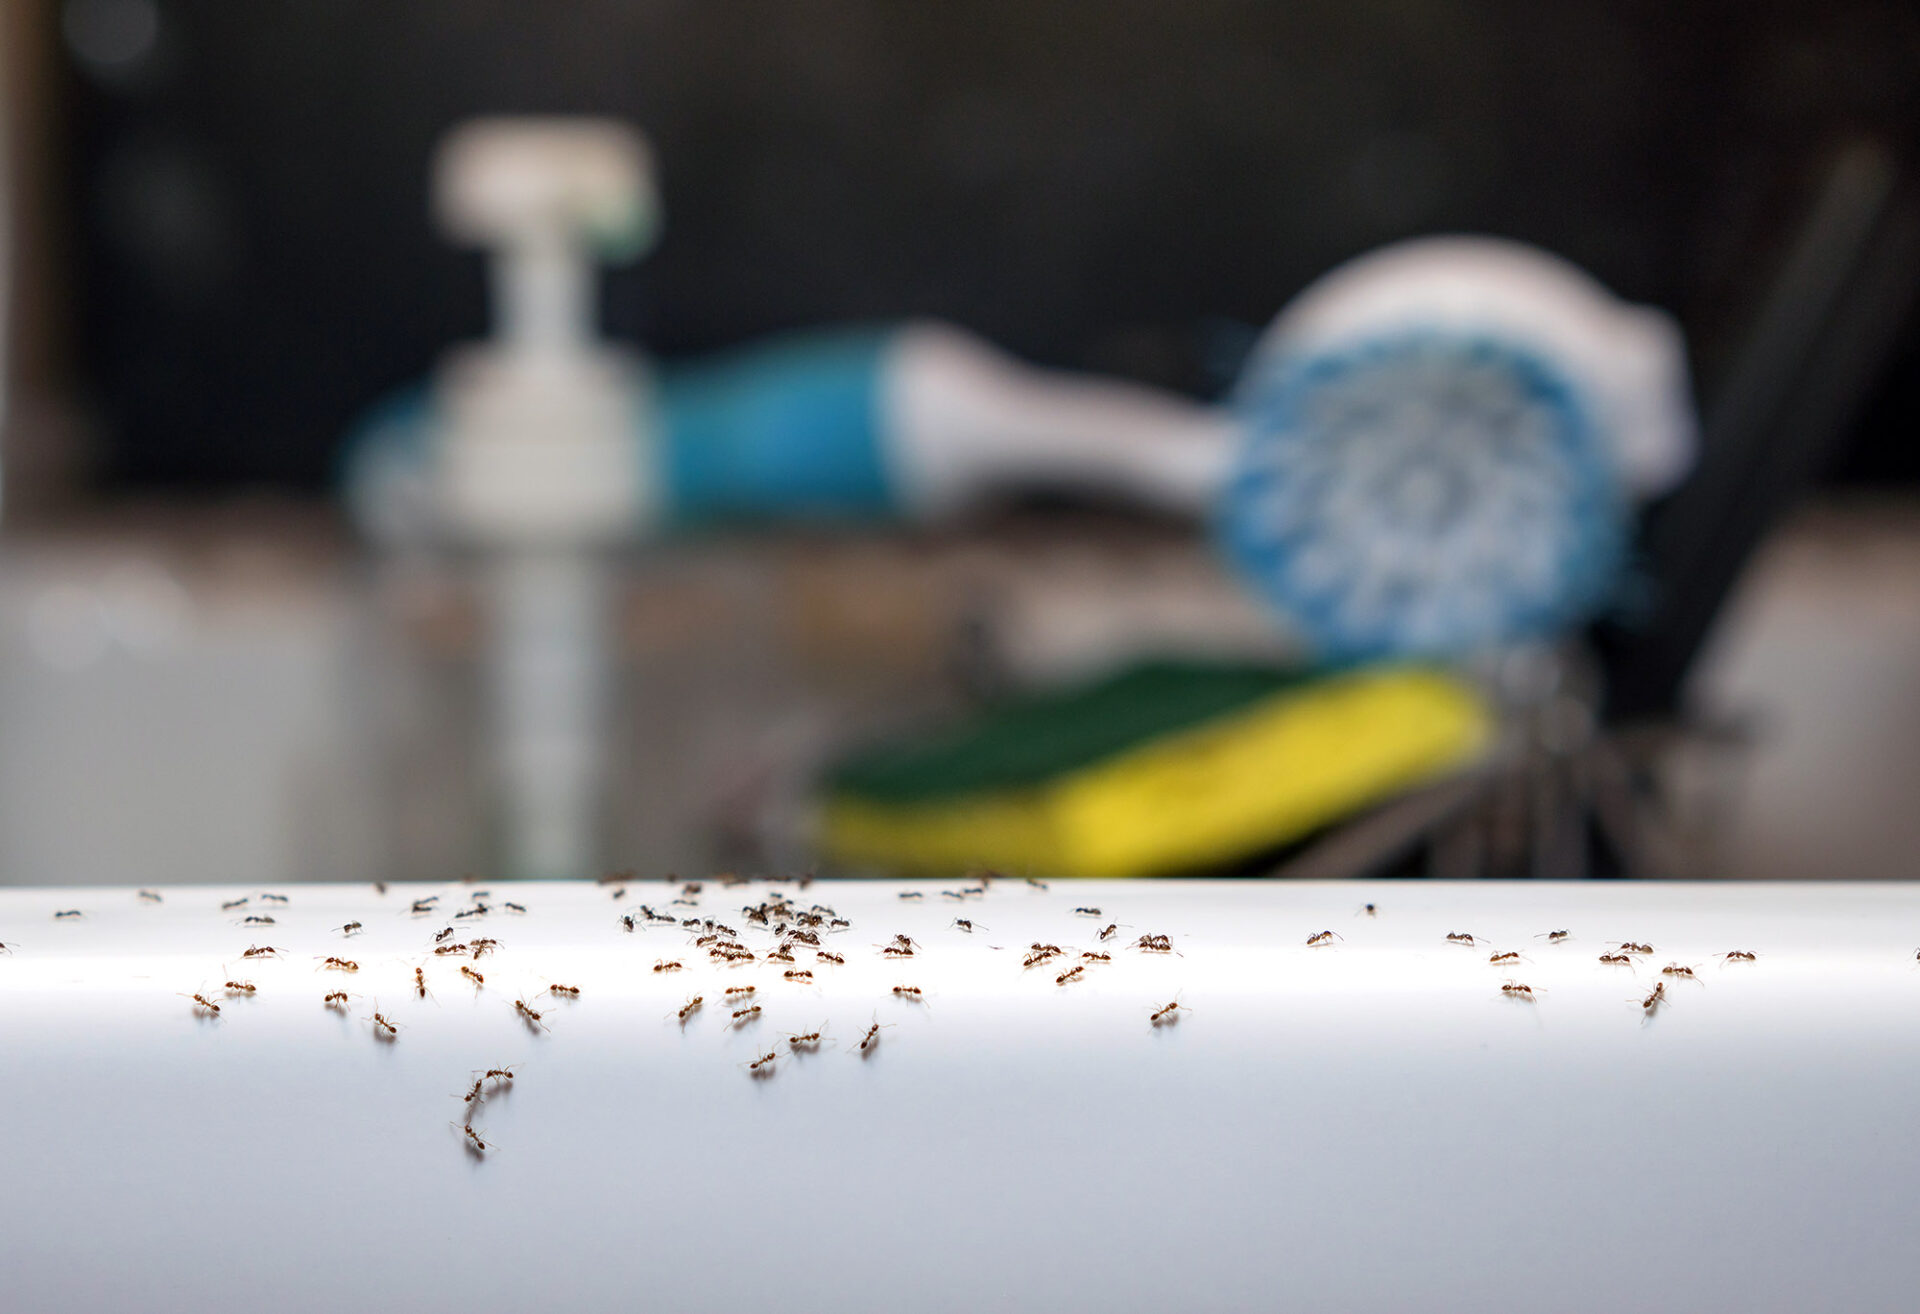 tiny ants on bathroom sink